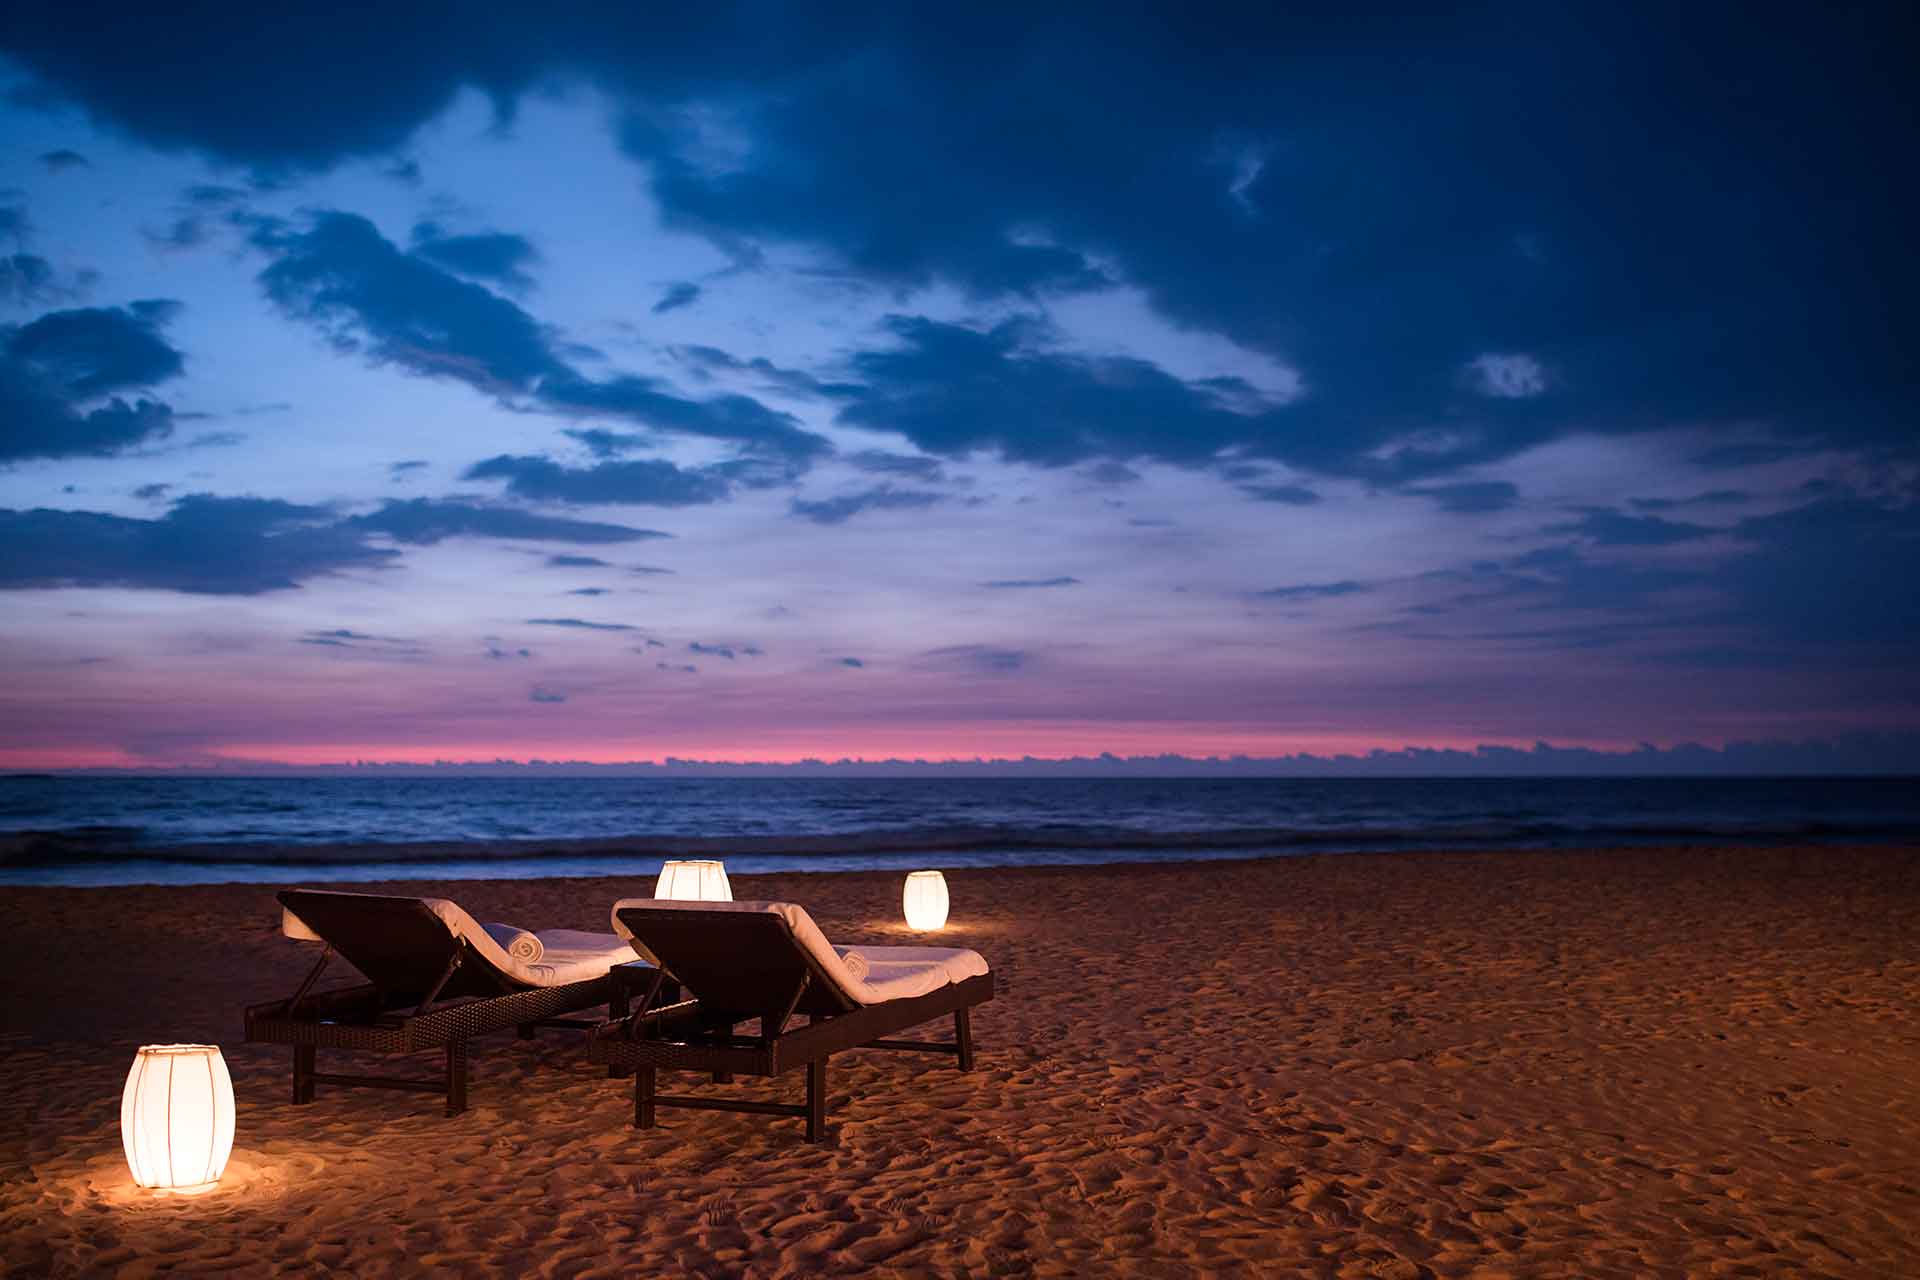 Bentota Beach is Mentioned under Sri Lanka in Khaleej Times Dubai – Budget Friendly Destination!